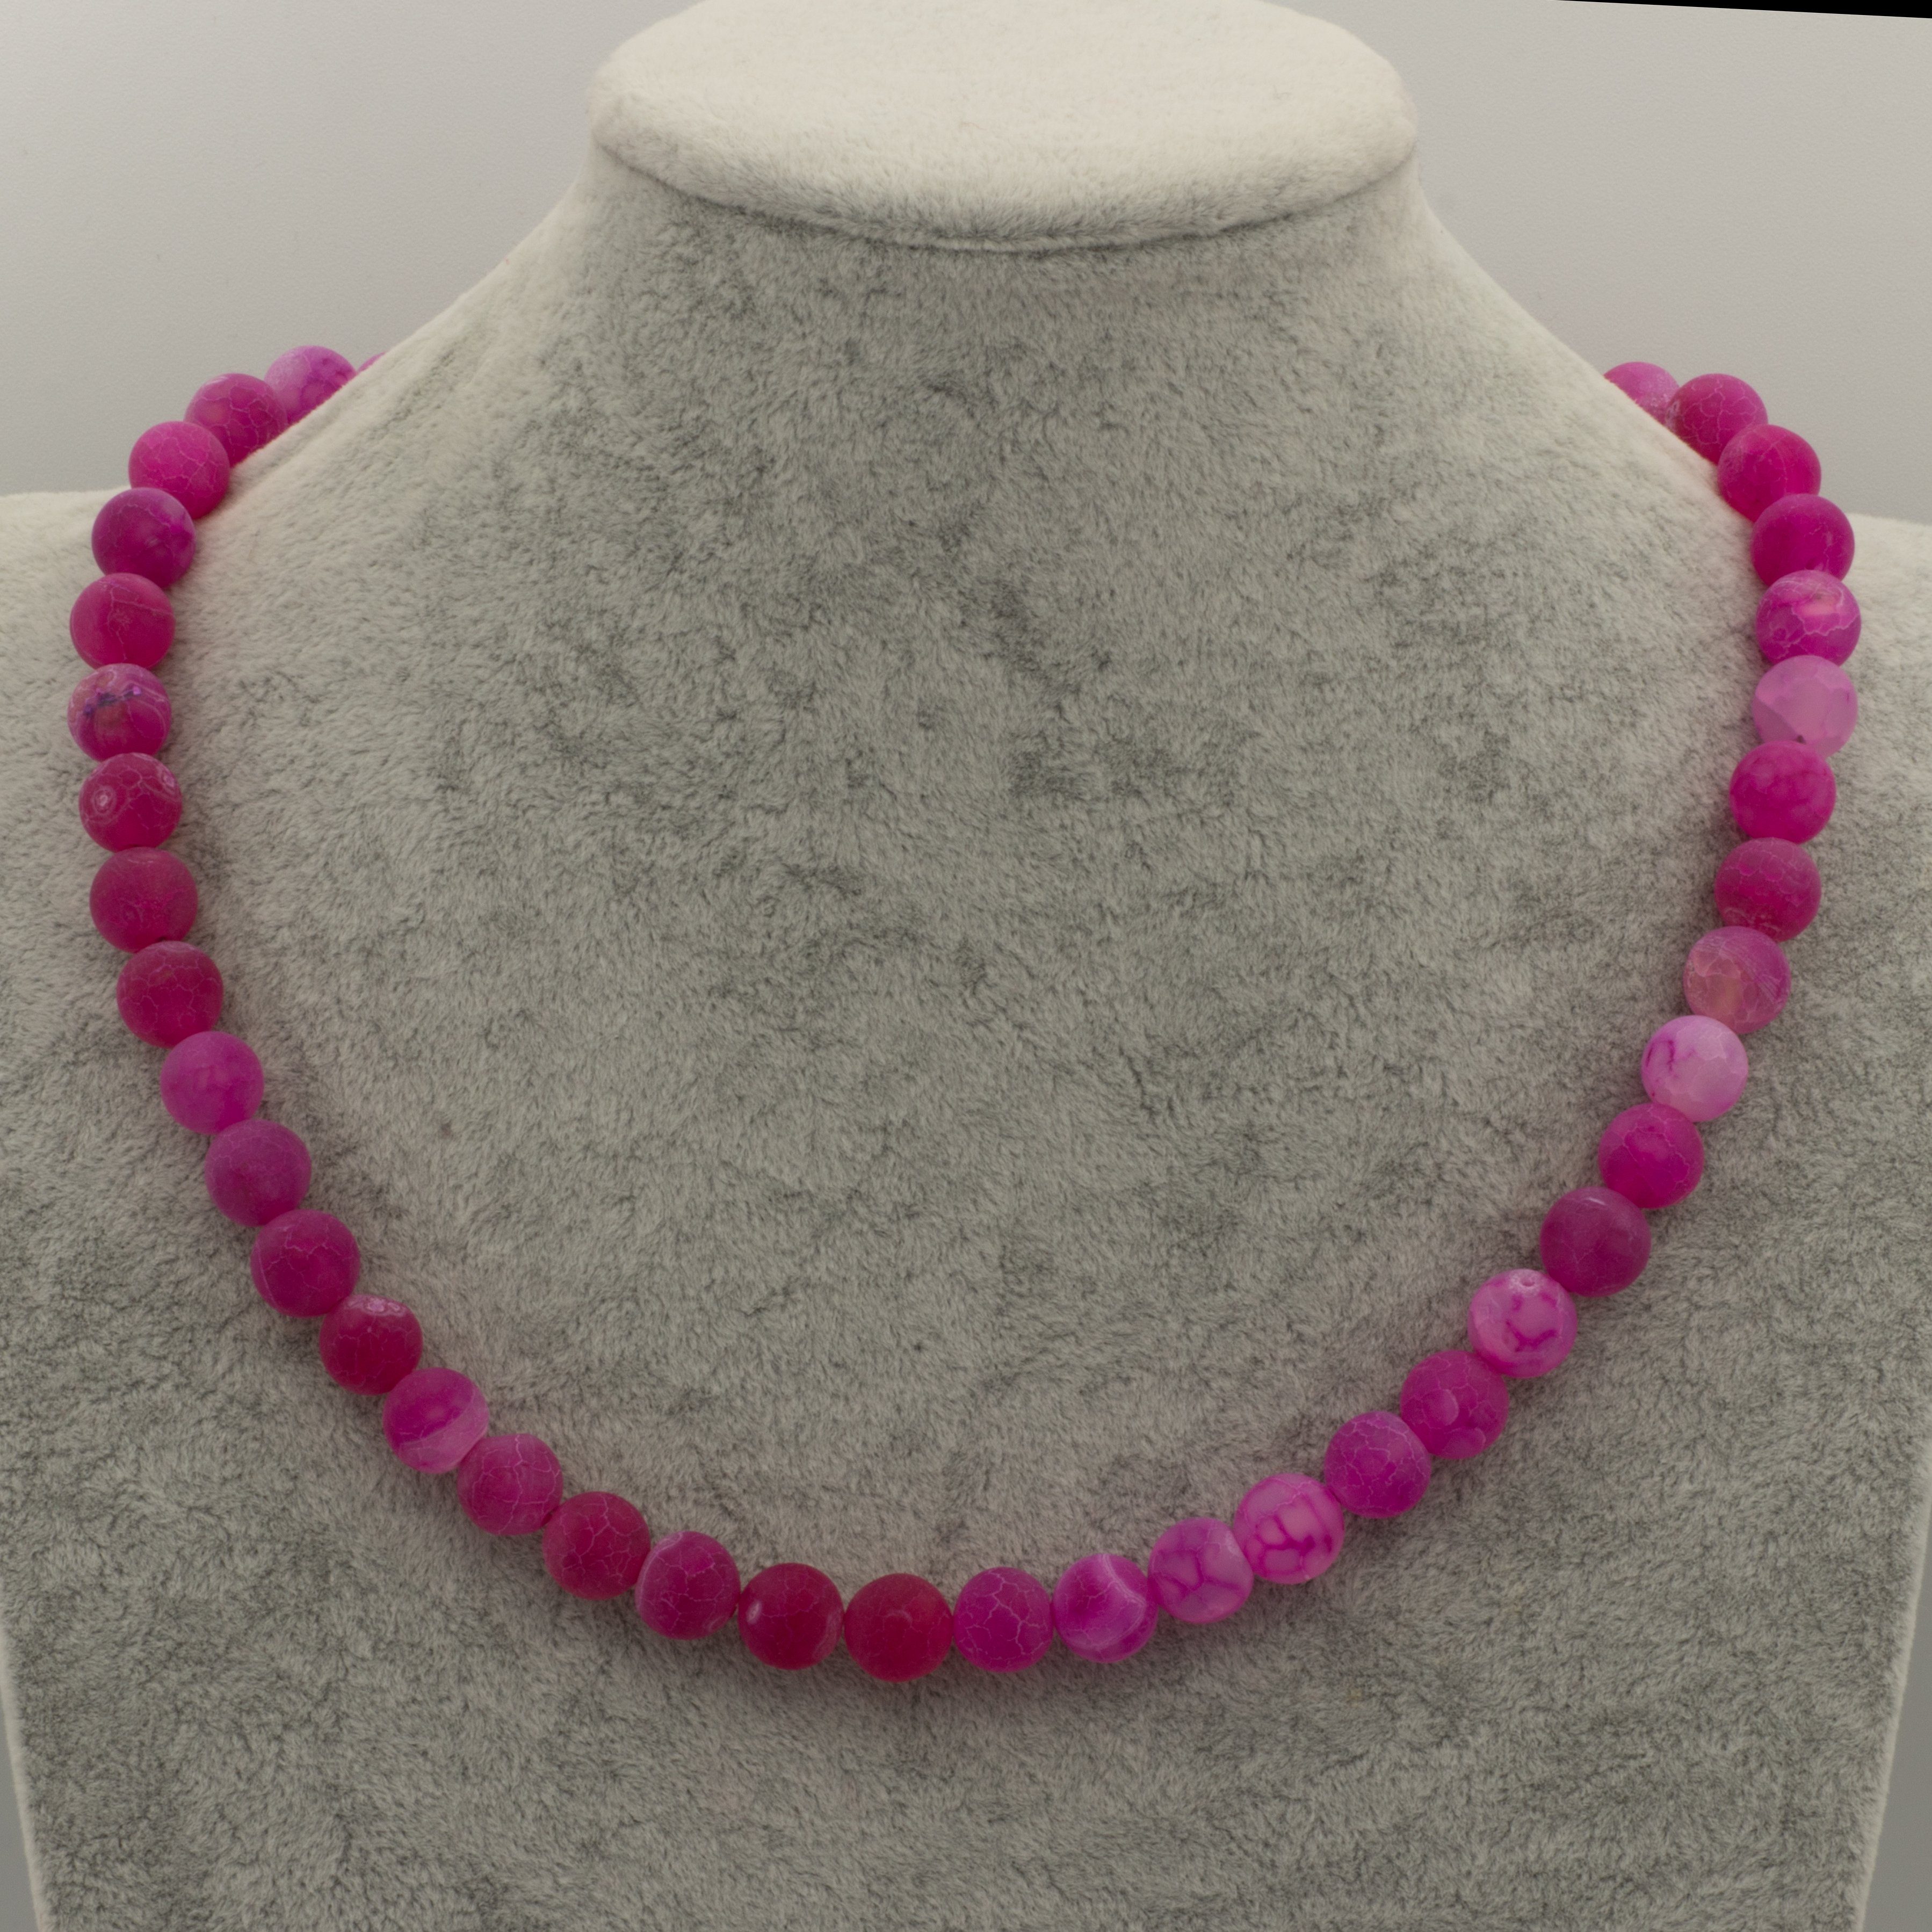 Bella Carina Perlenkette kette mit intensives intensives Edelsteinen 10 Pink pink mm Perlen, Achat